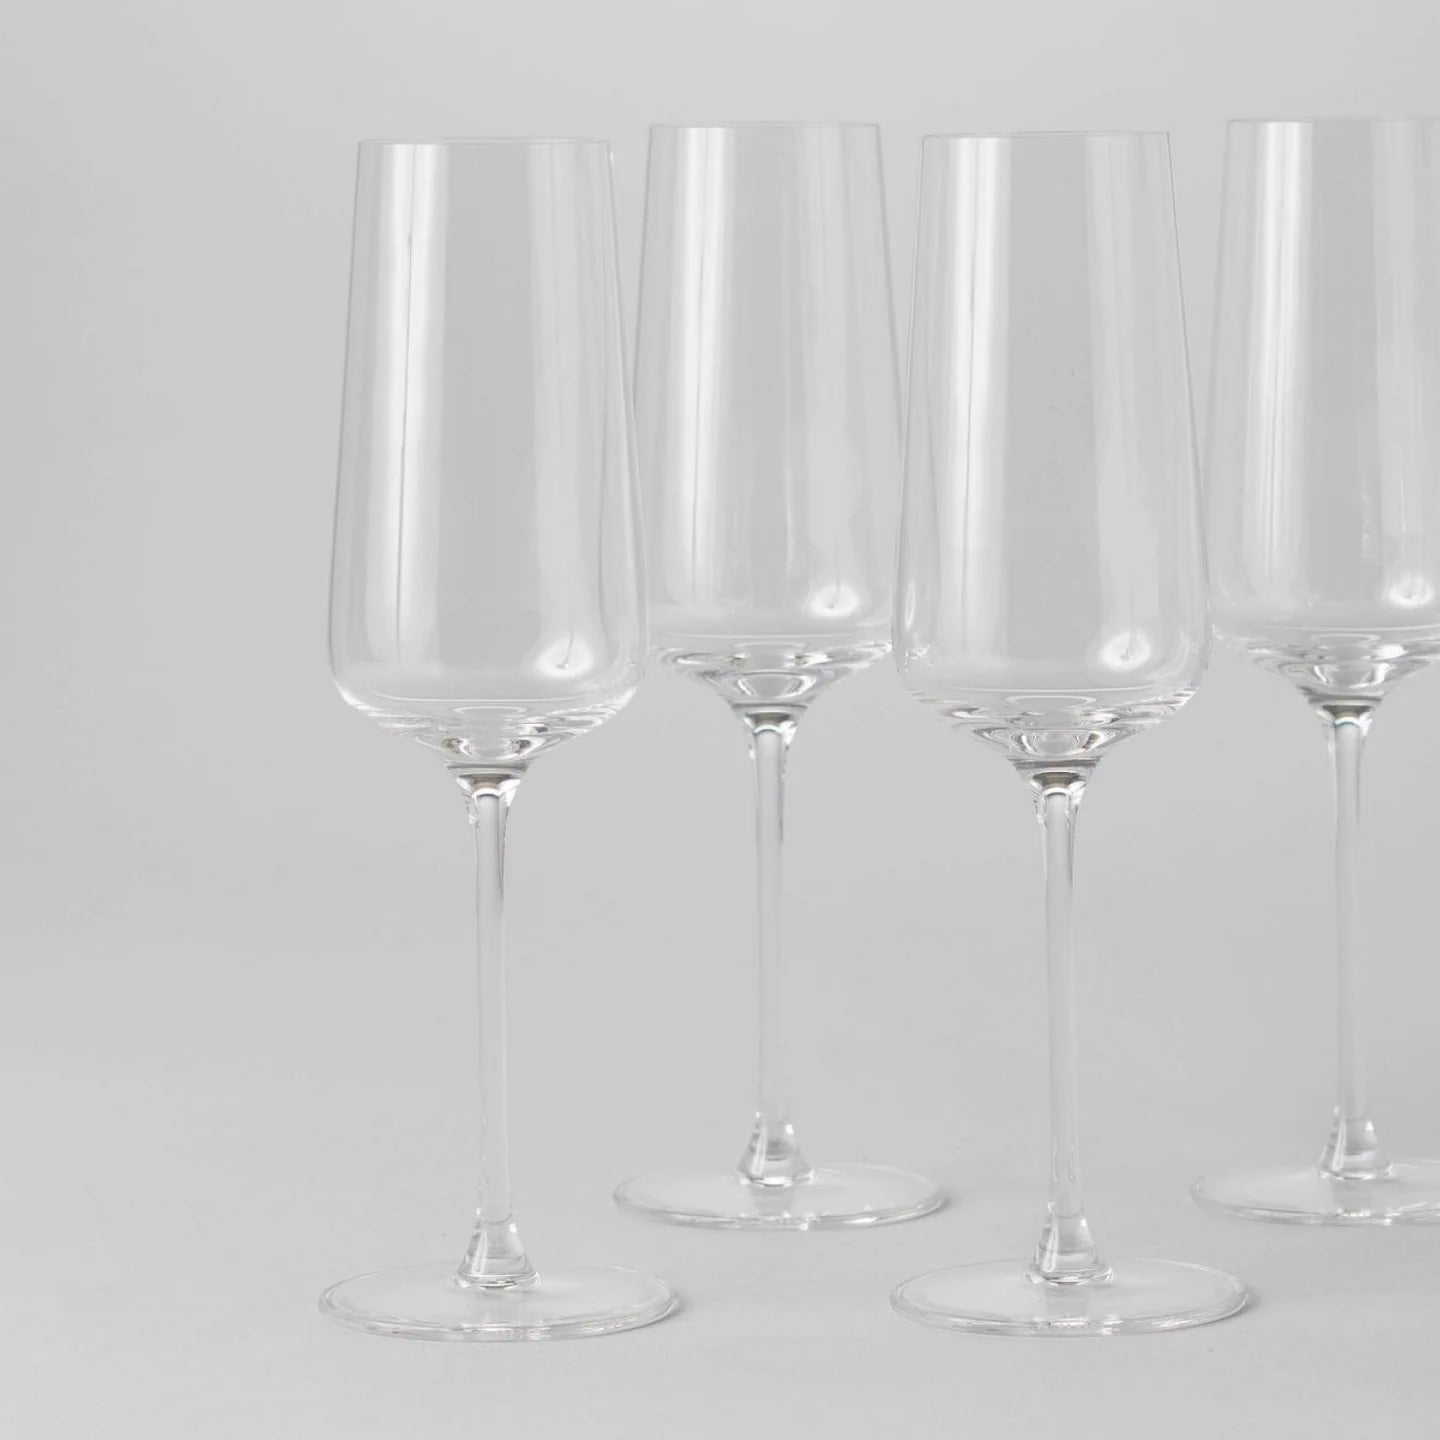 Fable Flute Glasses - Set of 4